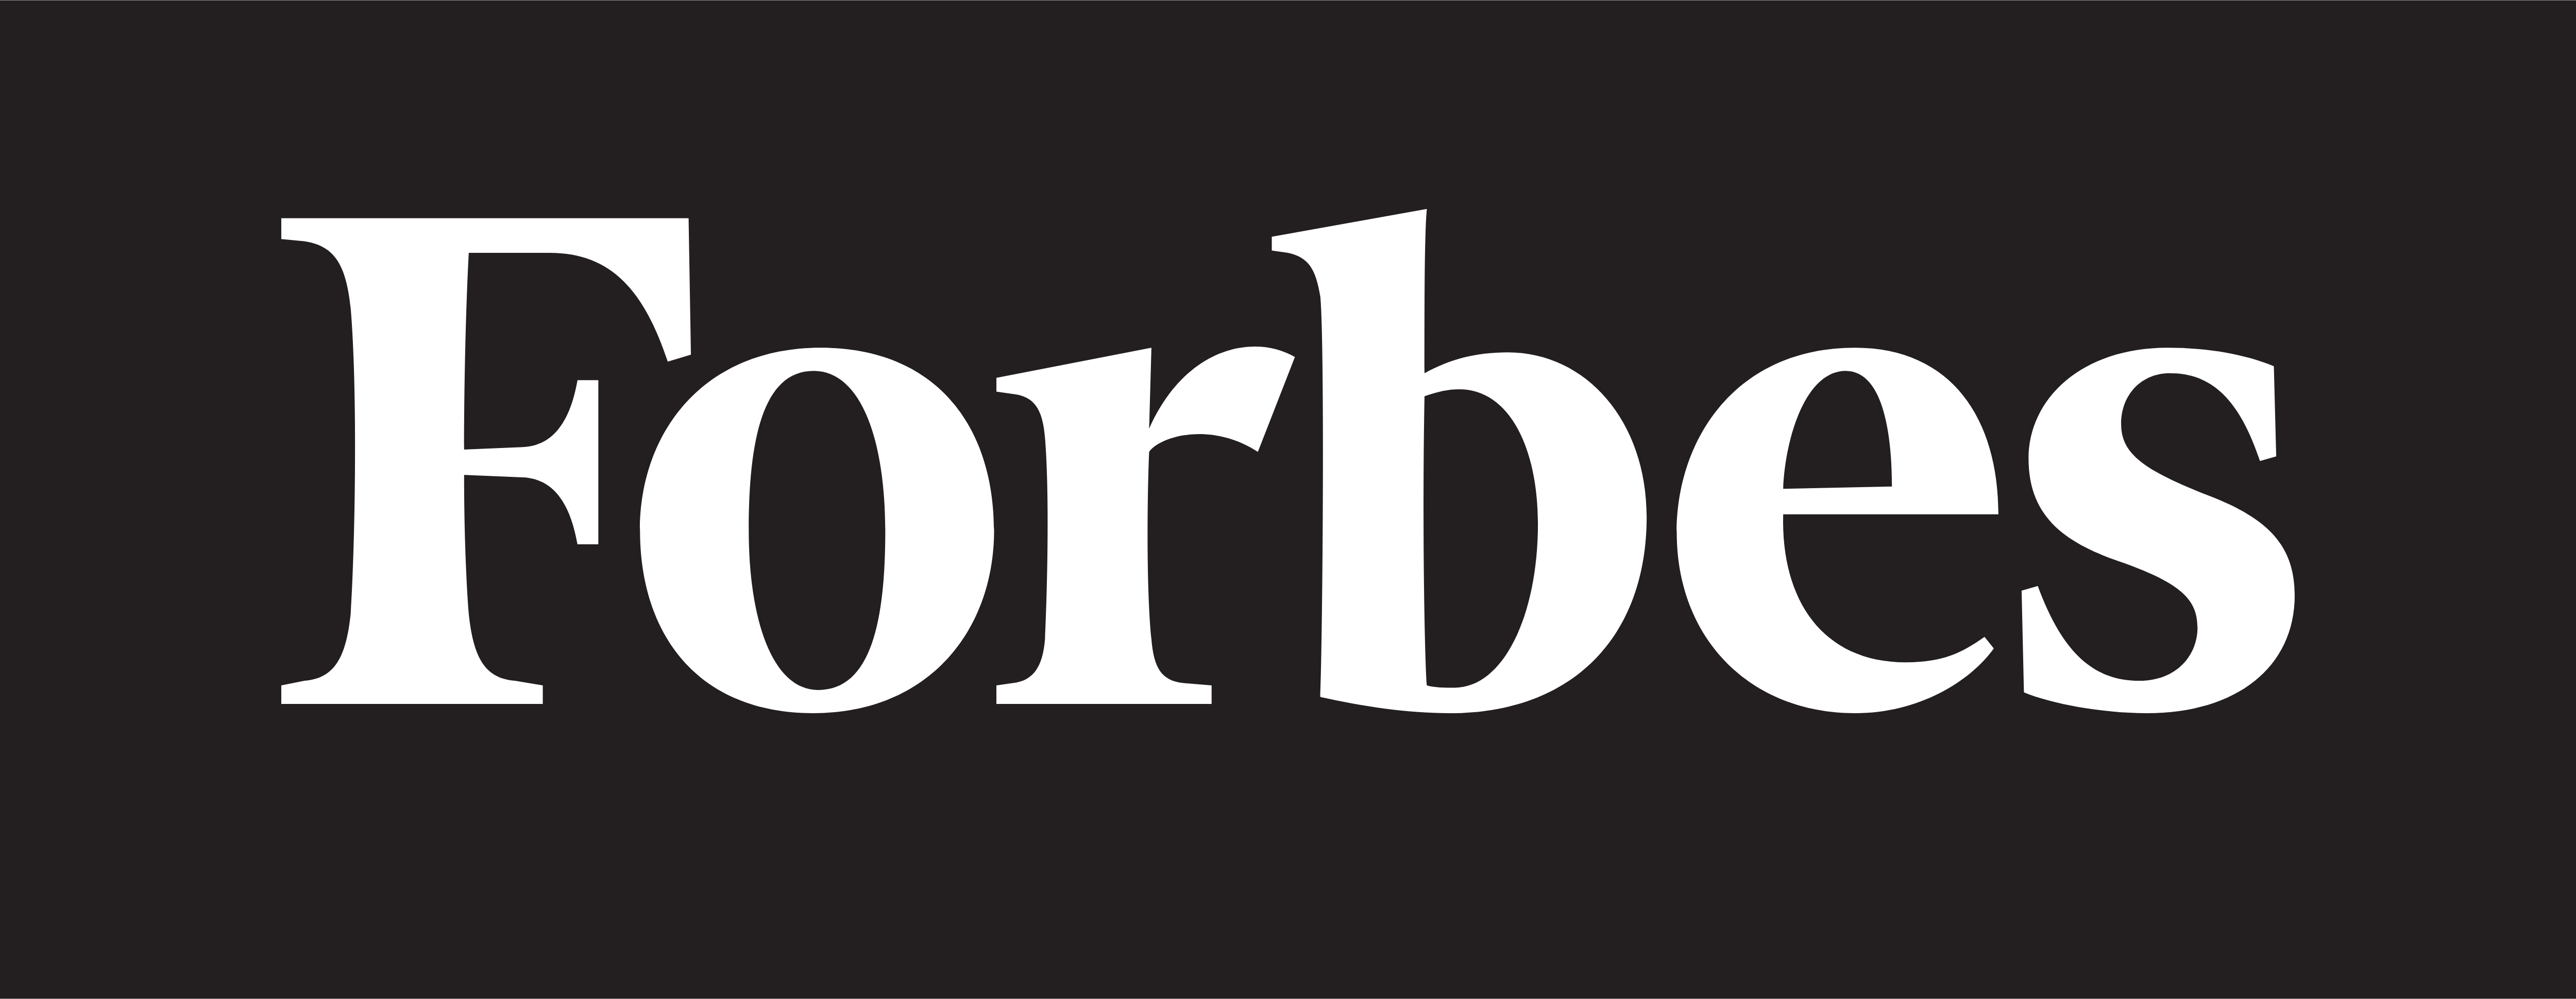 Forbes – Baixar logotipos